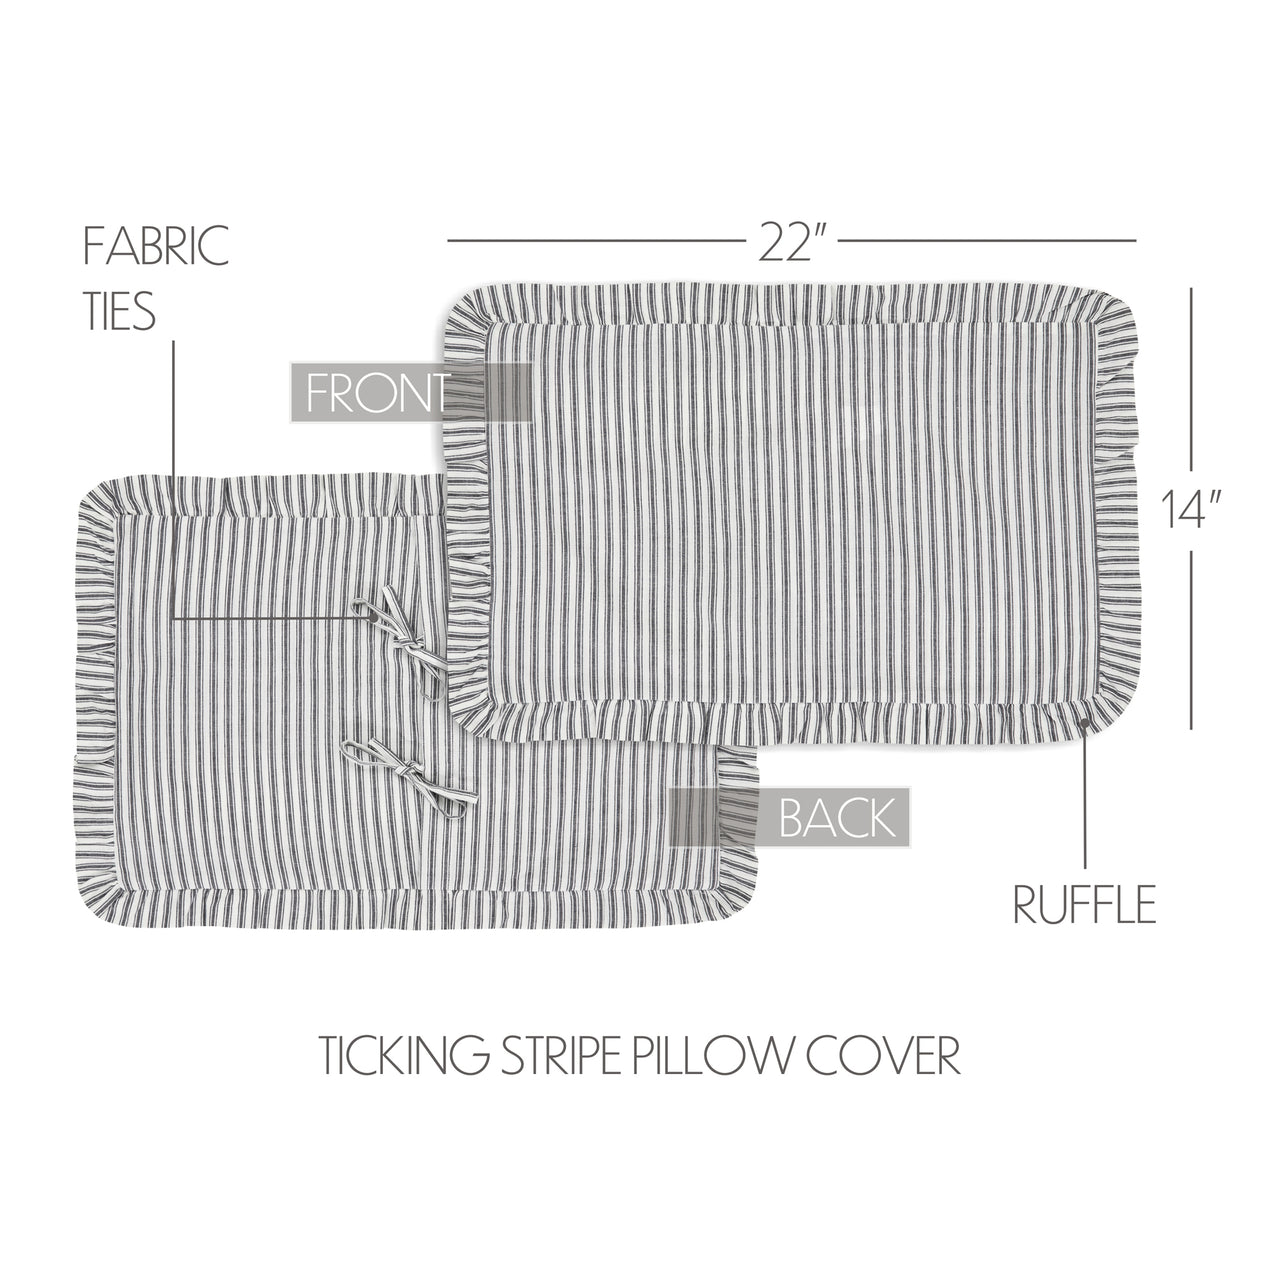 Sawyer Mill Black Ruffled Ticking Stripe Pillow Cover 14x22 VHC Brands